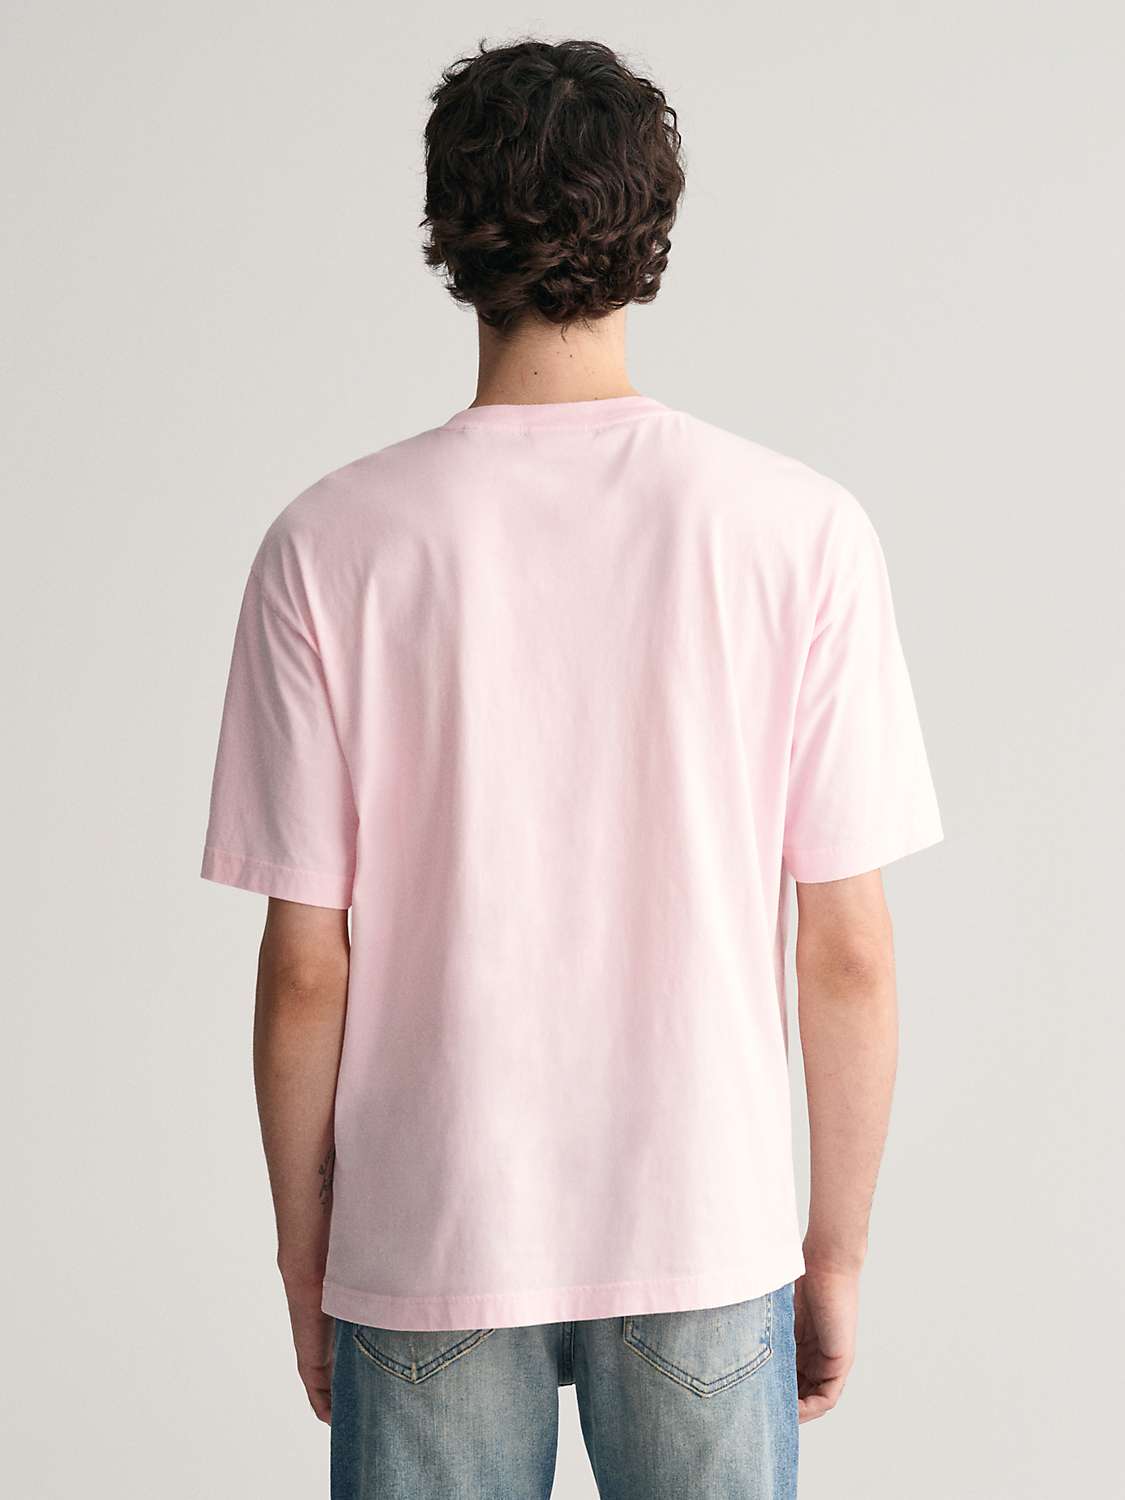 Buy GANT Washed Graphic Short Sleeve T-Shirt, Pink/Multi Online at johnlewis.com